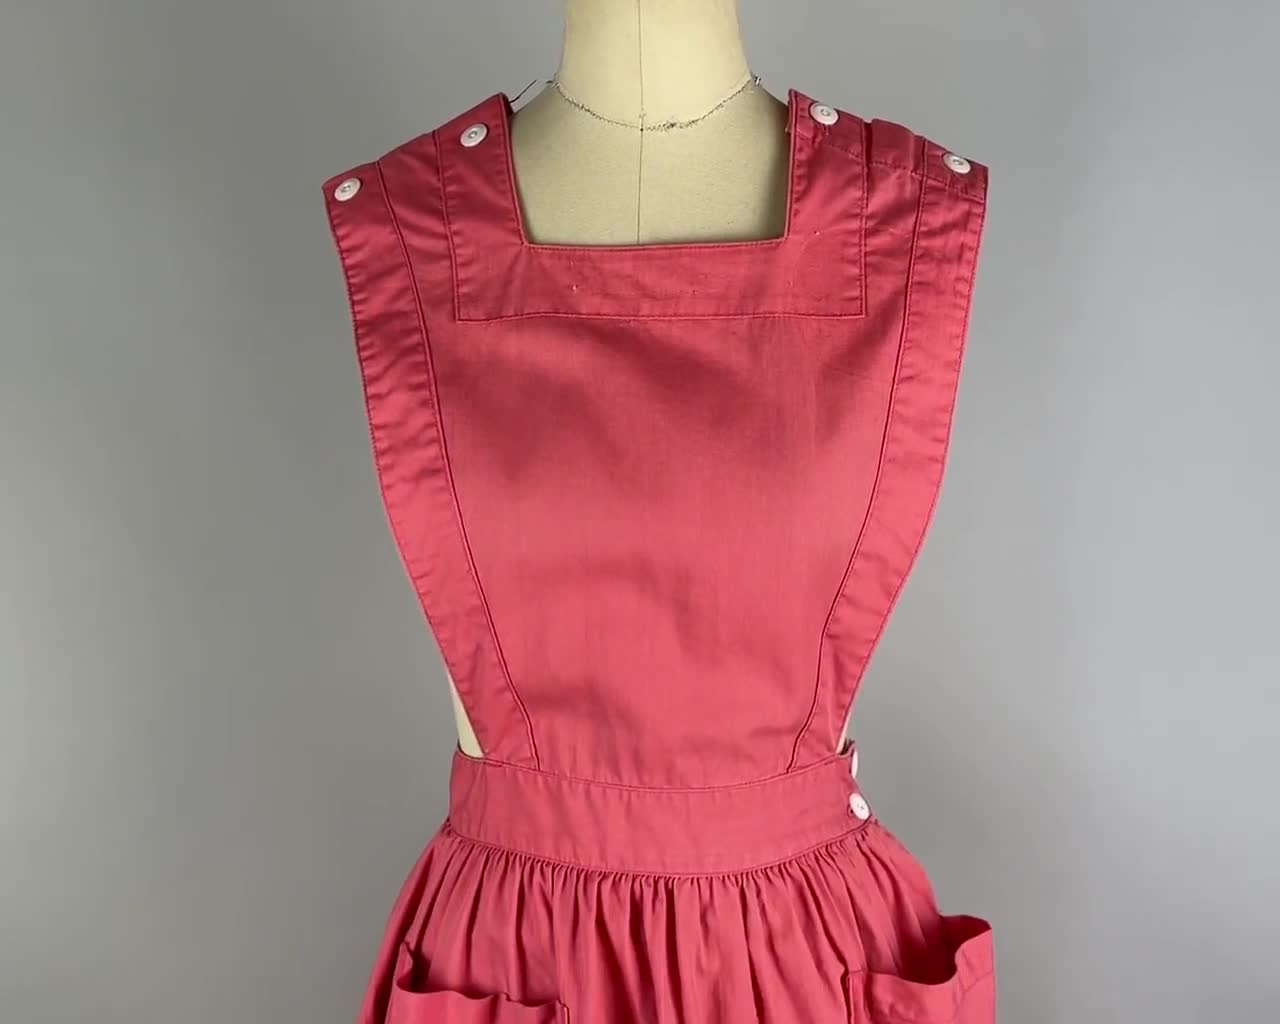 Palmier Linen Robe Mini Dress, Ivory/Sailor Red, Dresses